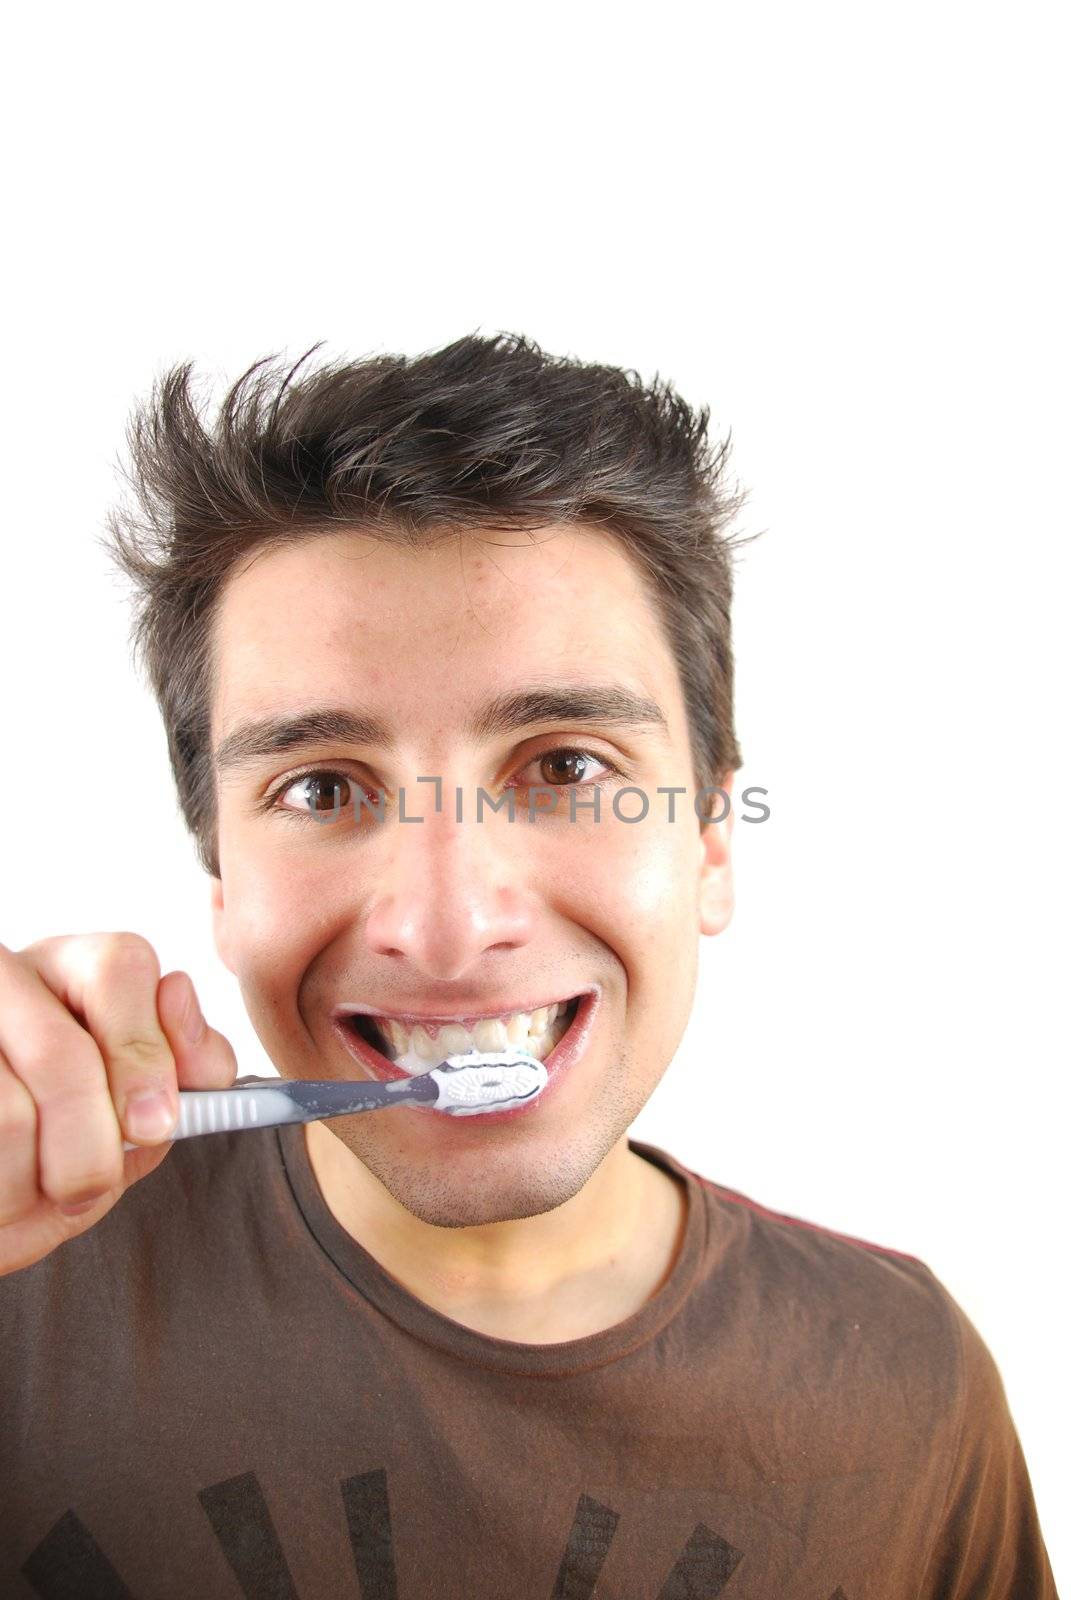 Cute guy washing his teeth by luissantos84